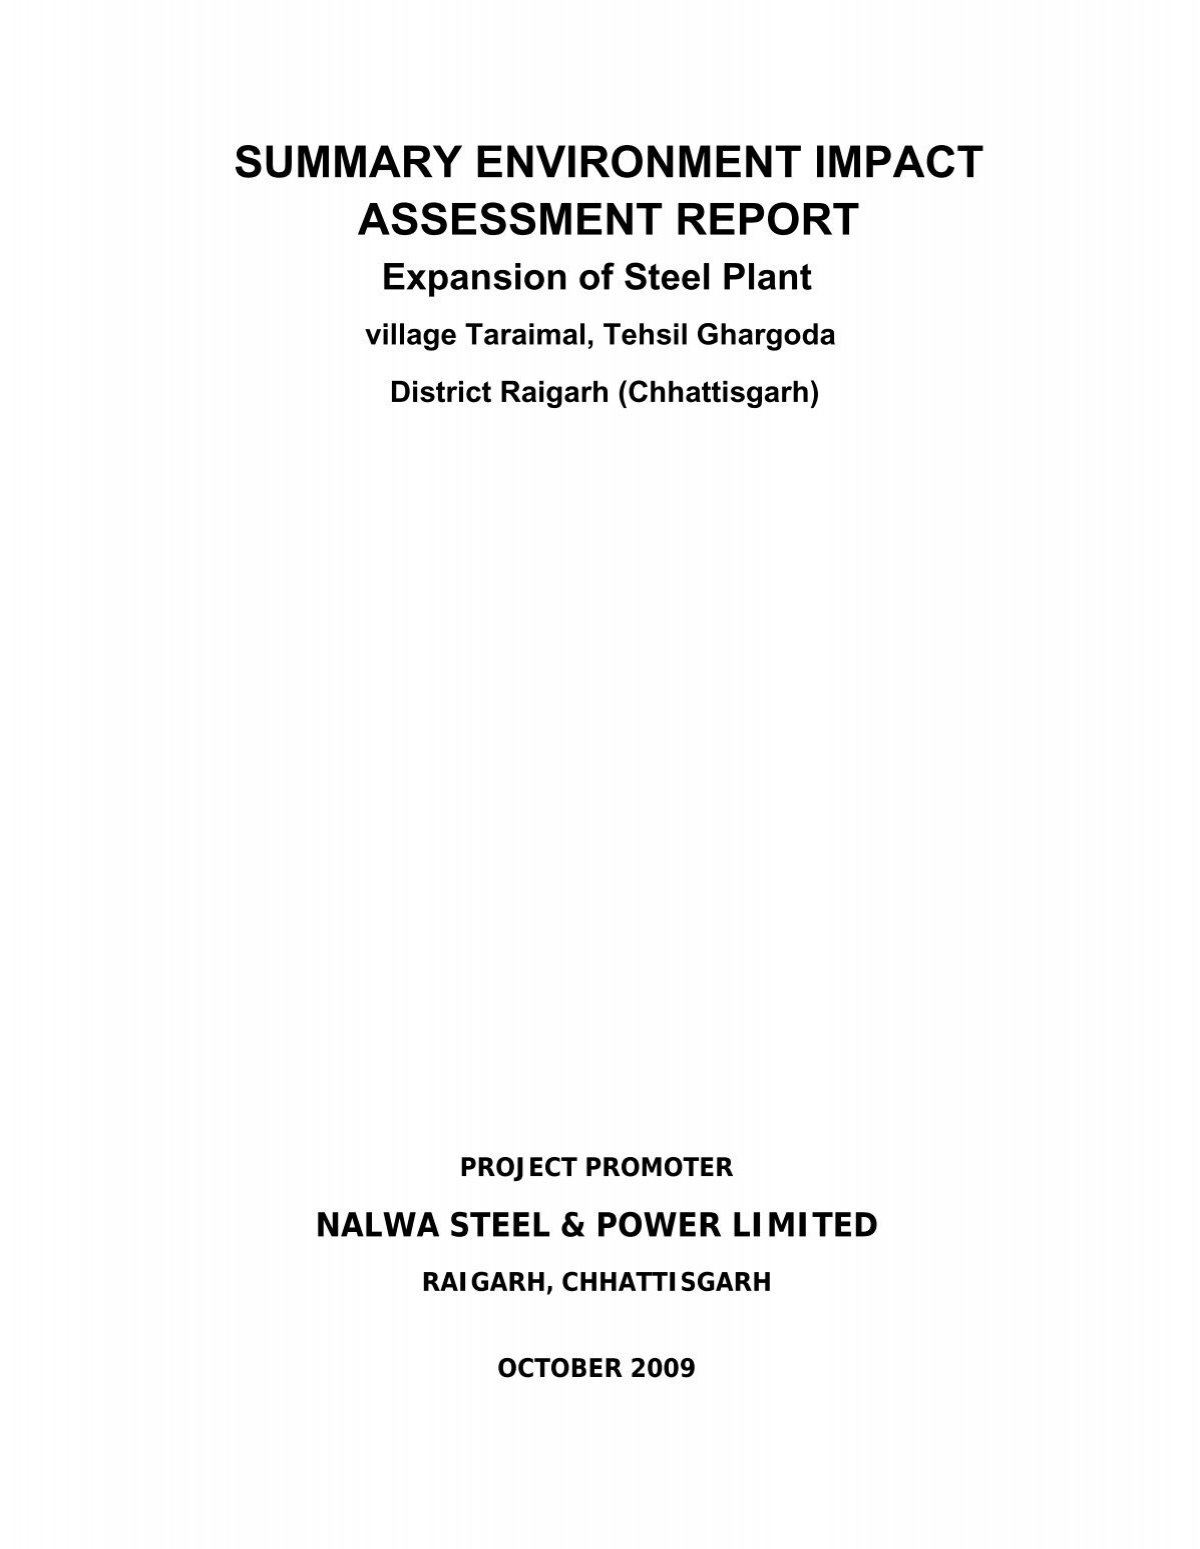 summary environment impact assessment report - Chhattisgarh ...